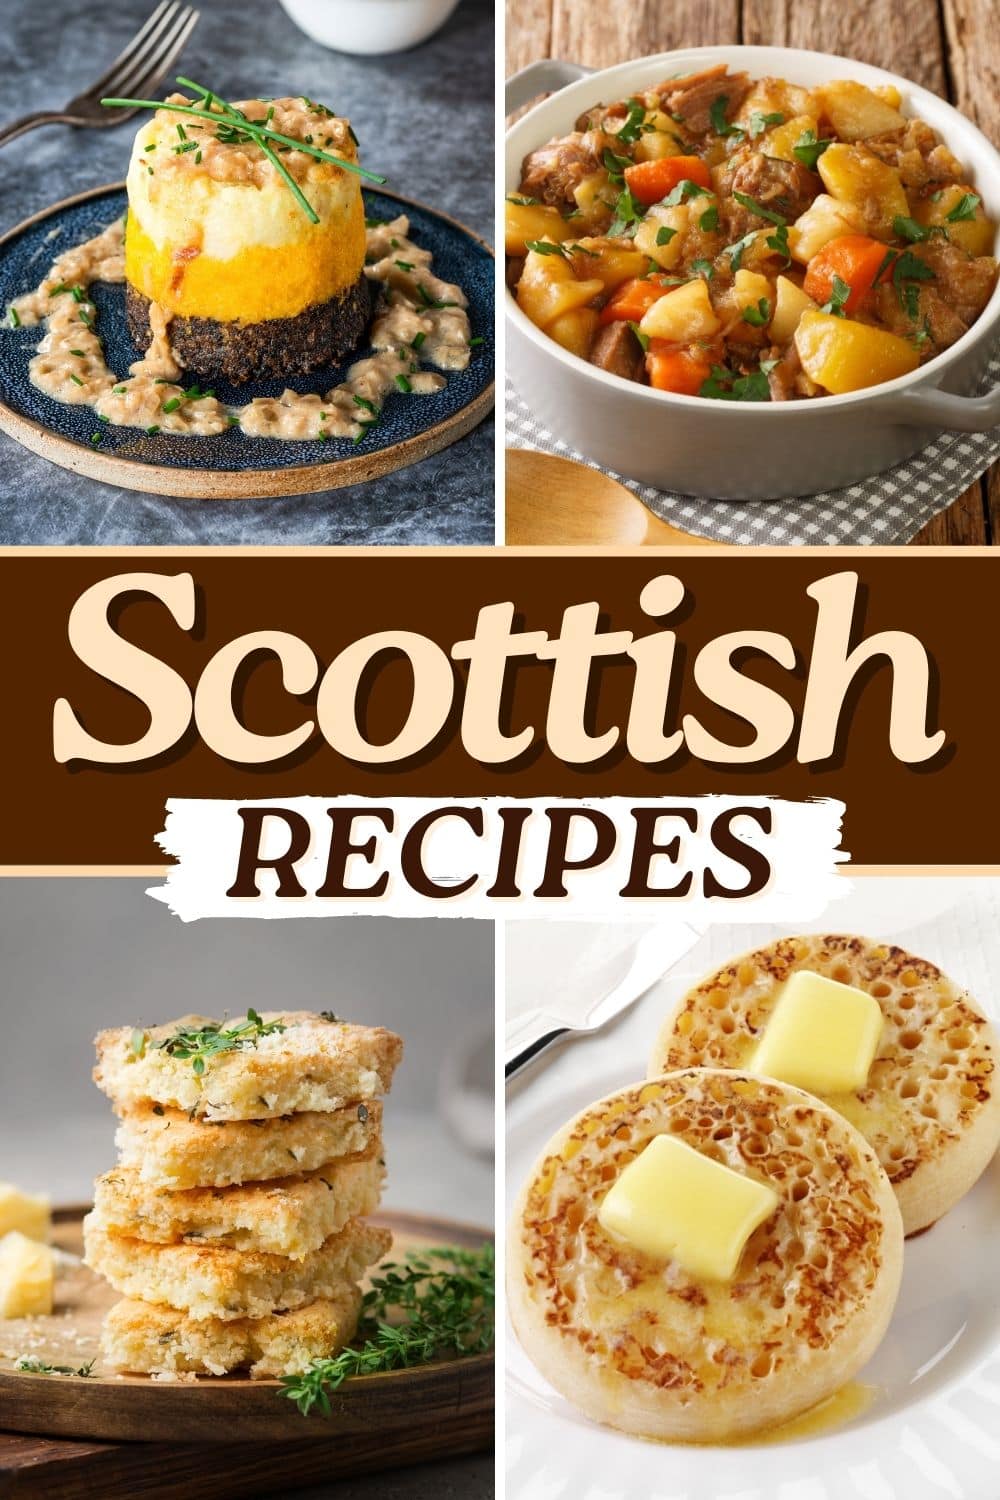 Scottish Recipes